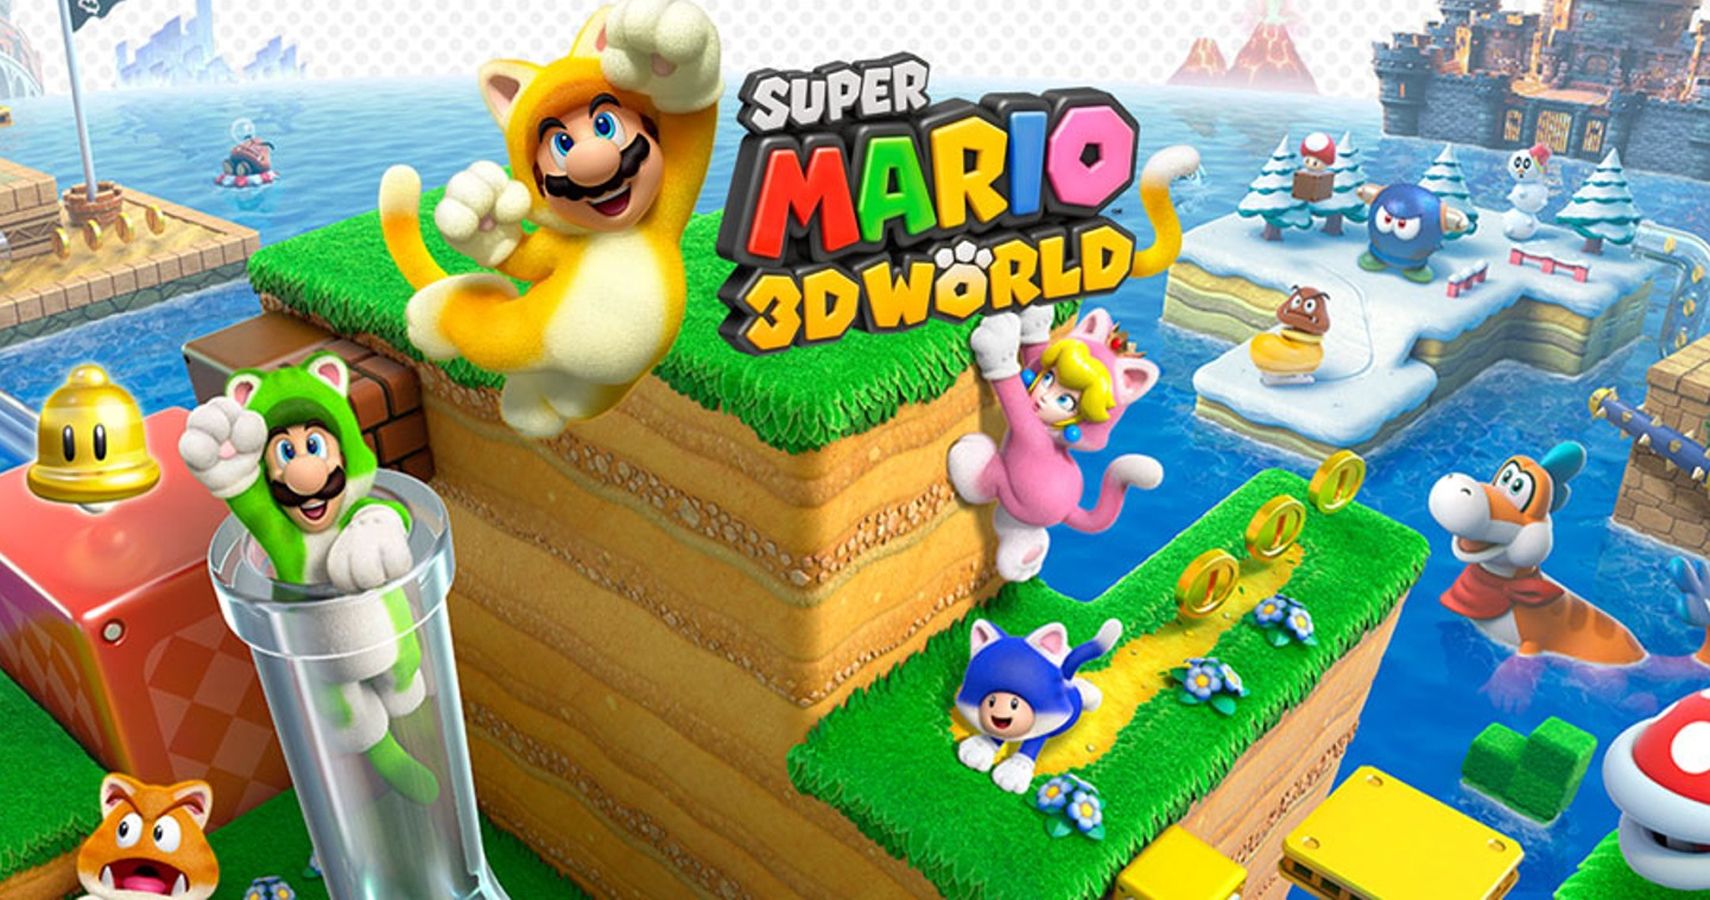 Super Mario 3D World - Nintendo Wii U